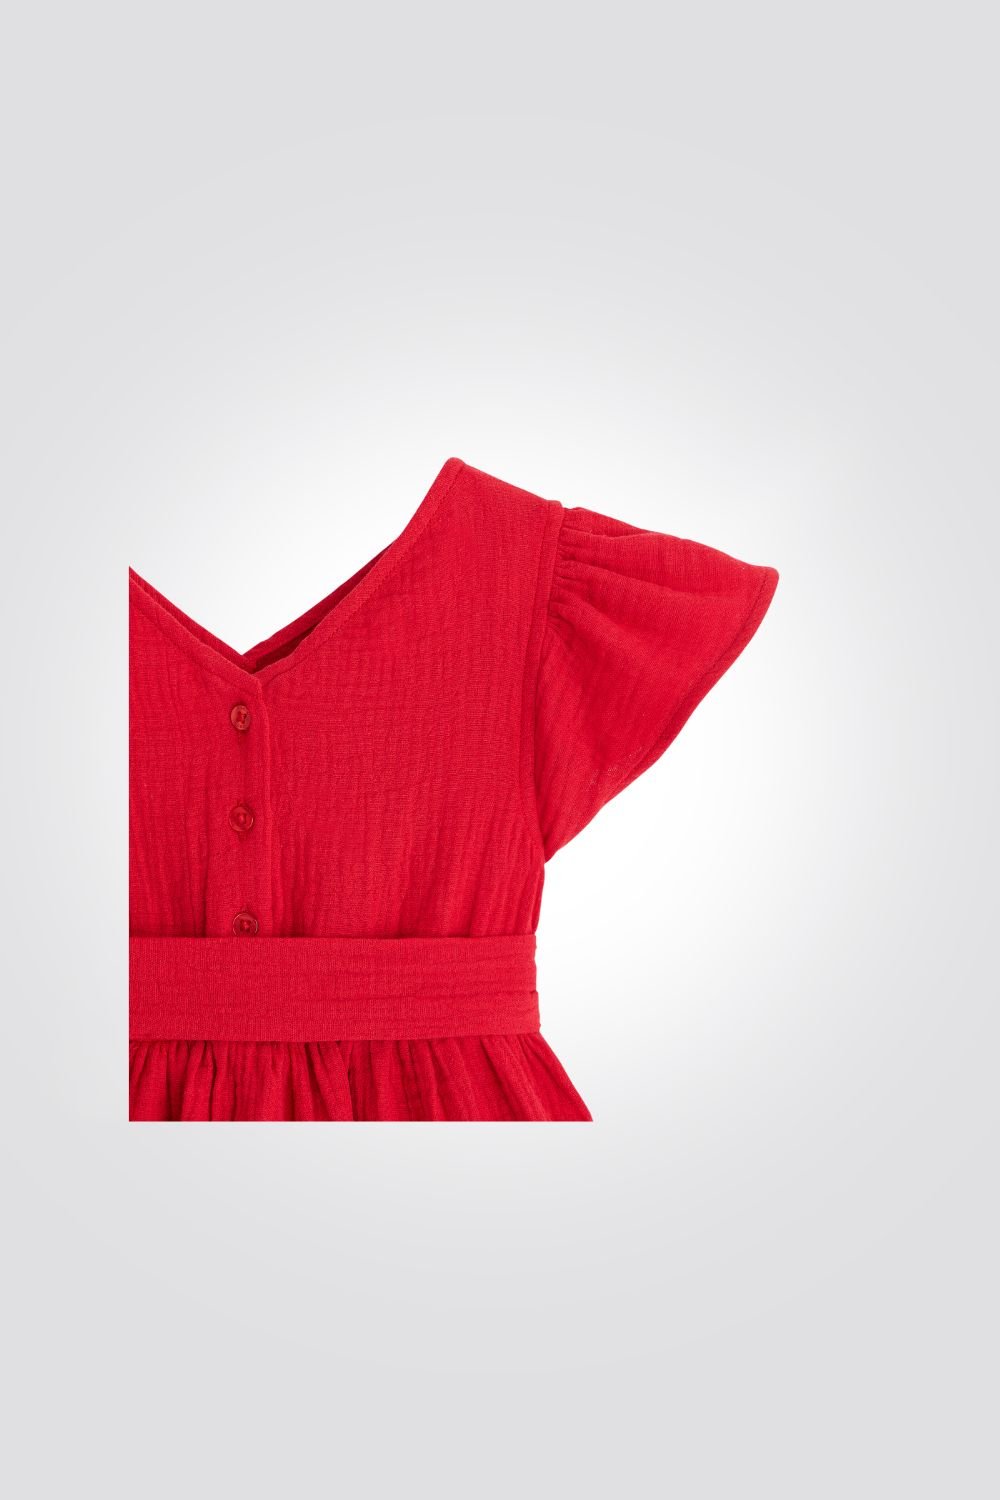 OBAIBI - שמלת תינוקות אלגנטית שרוול קצר פליסה באדום - MASHBIR//365